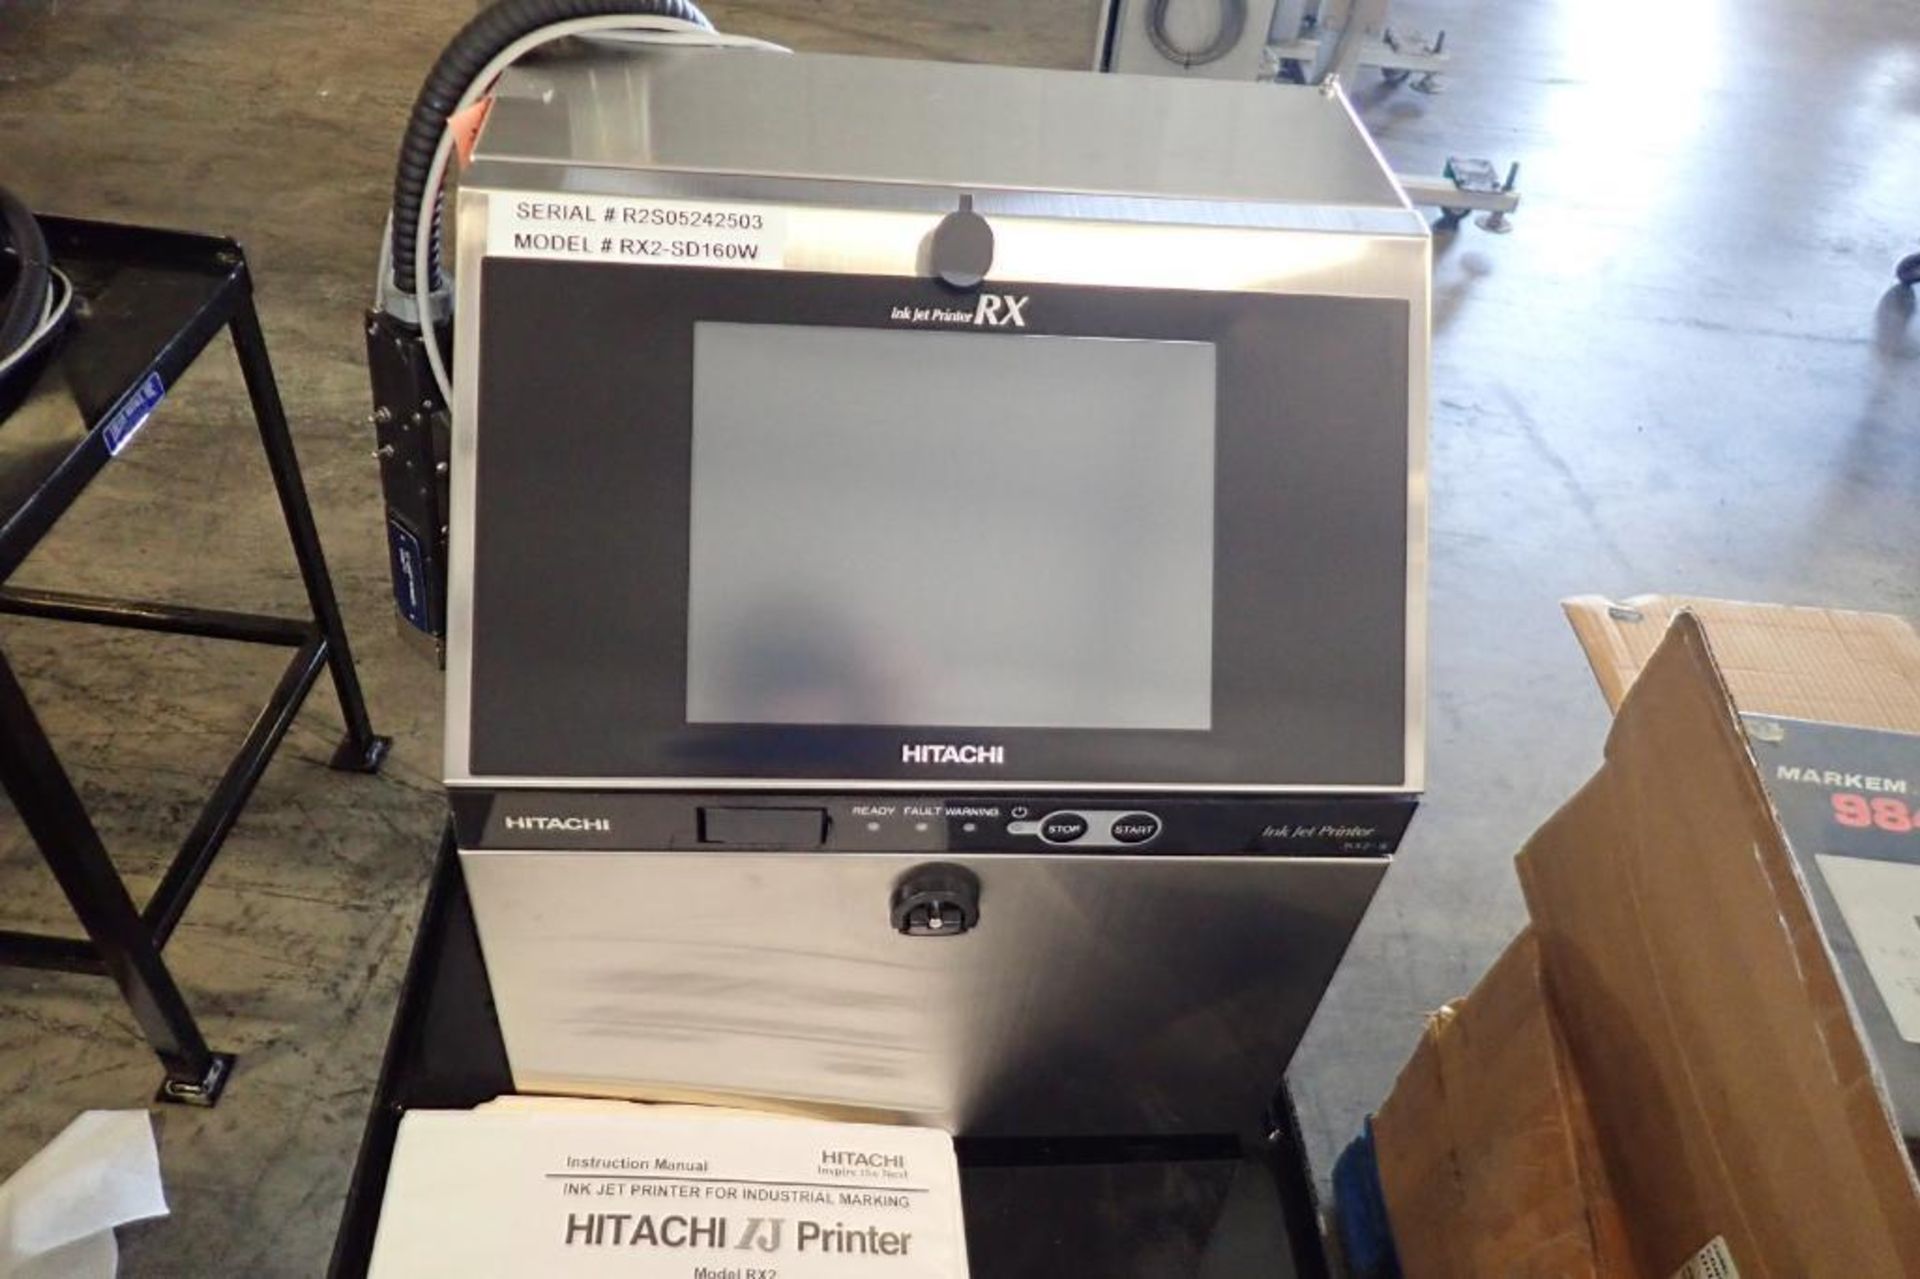 Hitachi ink jet printer, Model RX2-SD160W, SN R2S05242503, 1 ph., 100-120 volt, on stand { Rigging - Image 3 of 14